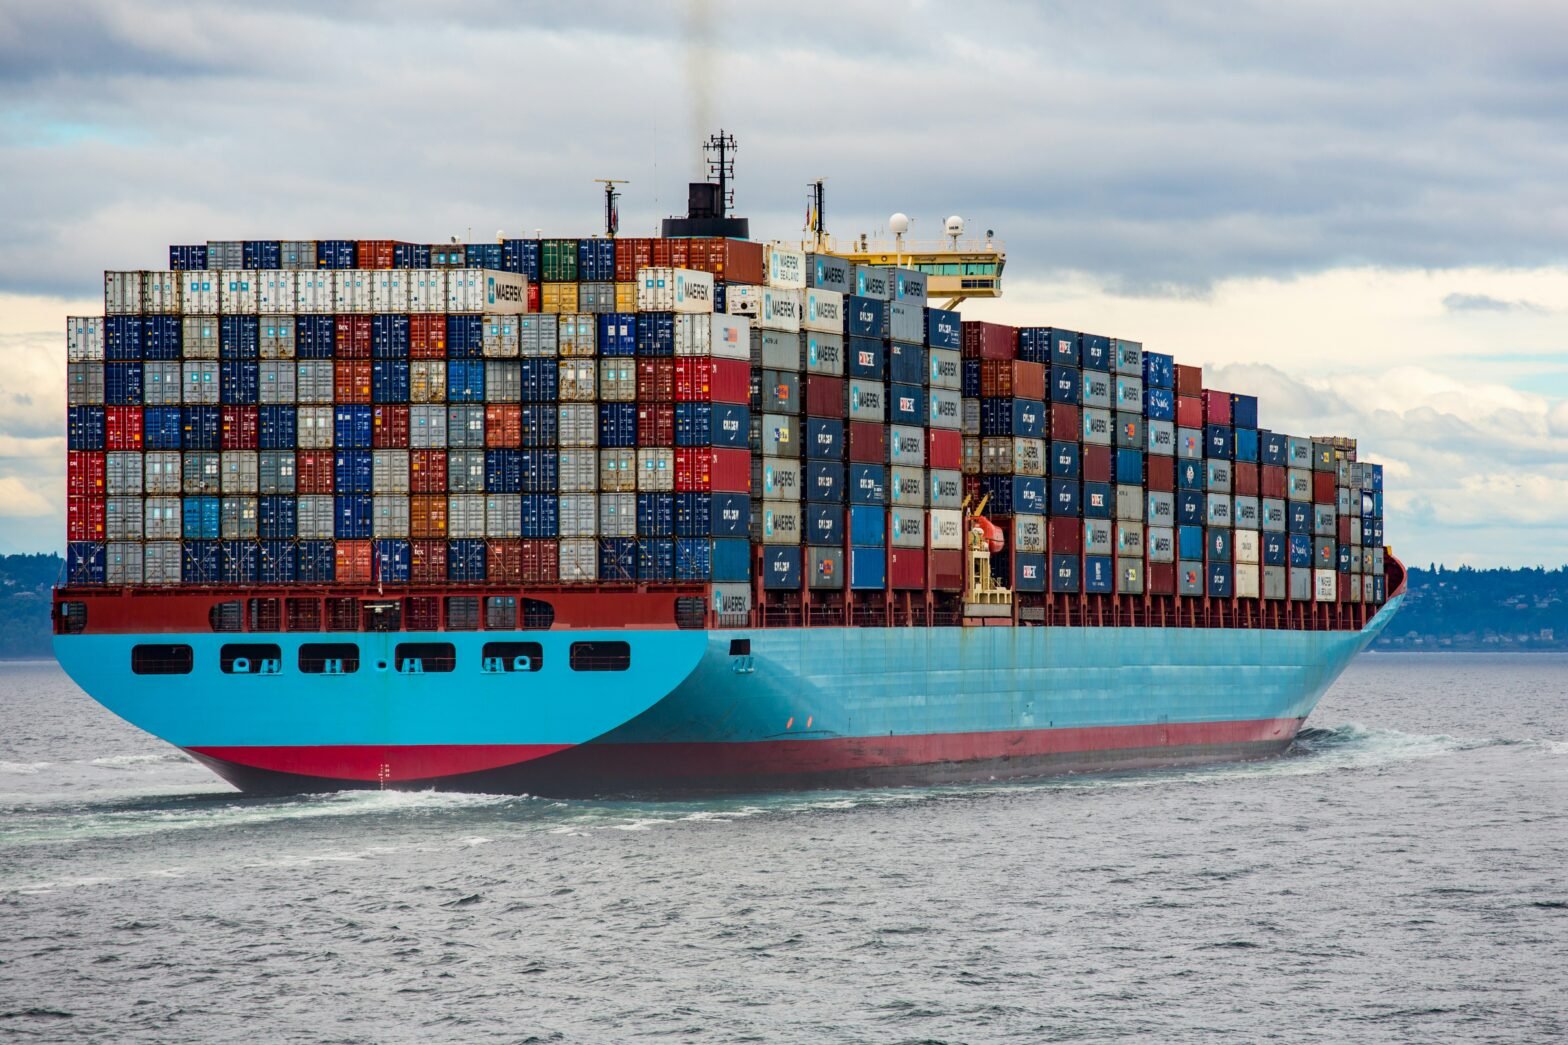 Docker-container